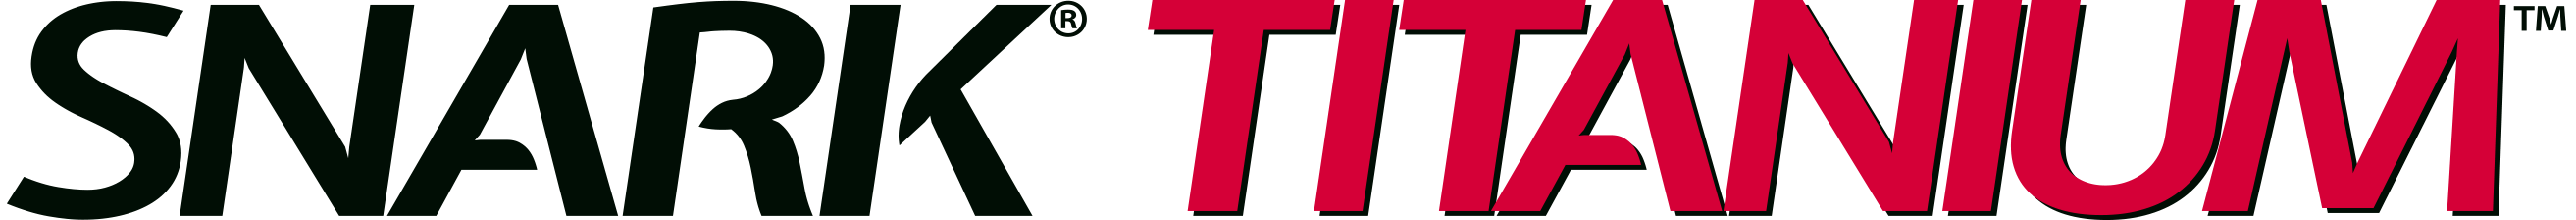 Snark Tuners logo